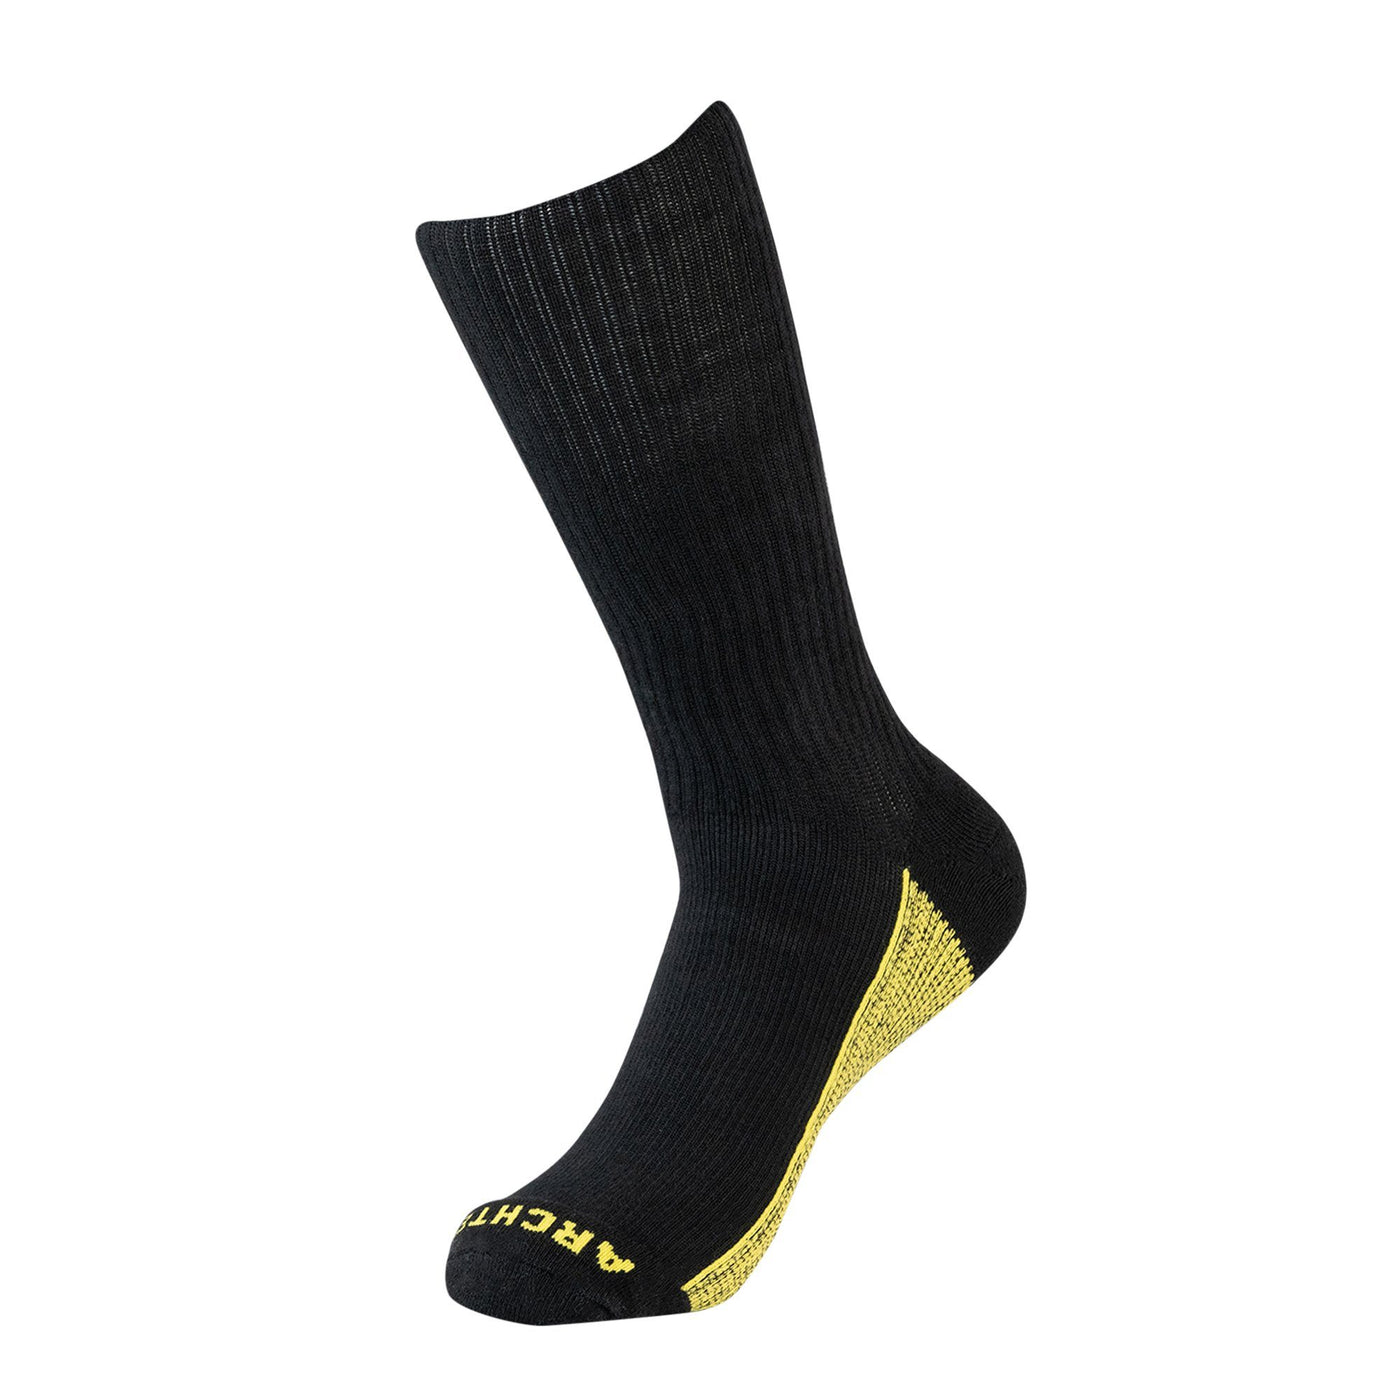 Athletic Crew Sock 3-Pack in Black athletic socks ArchTek